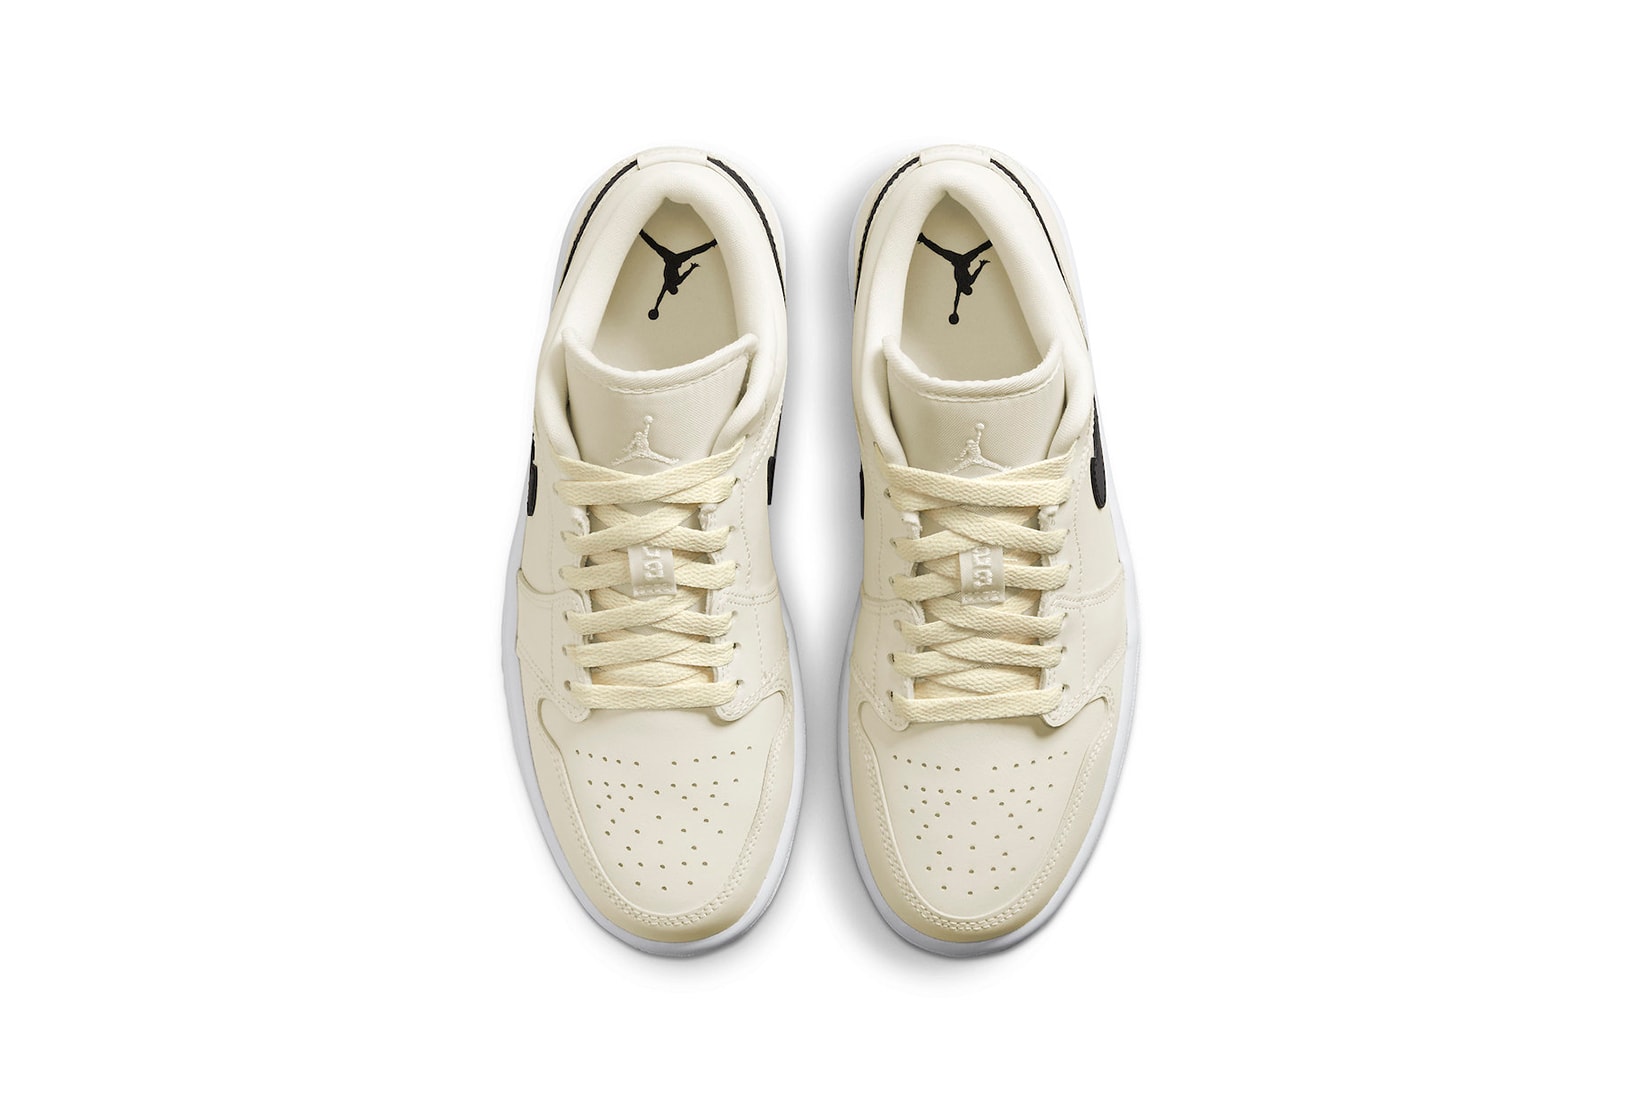 Nike Air Jordan 1 AJ1 Low Coconut Milk Cream White Black Footwear Shoes Kicks Top Aerial insole